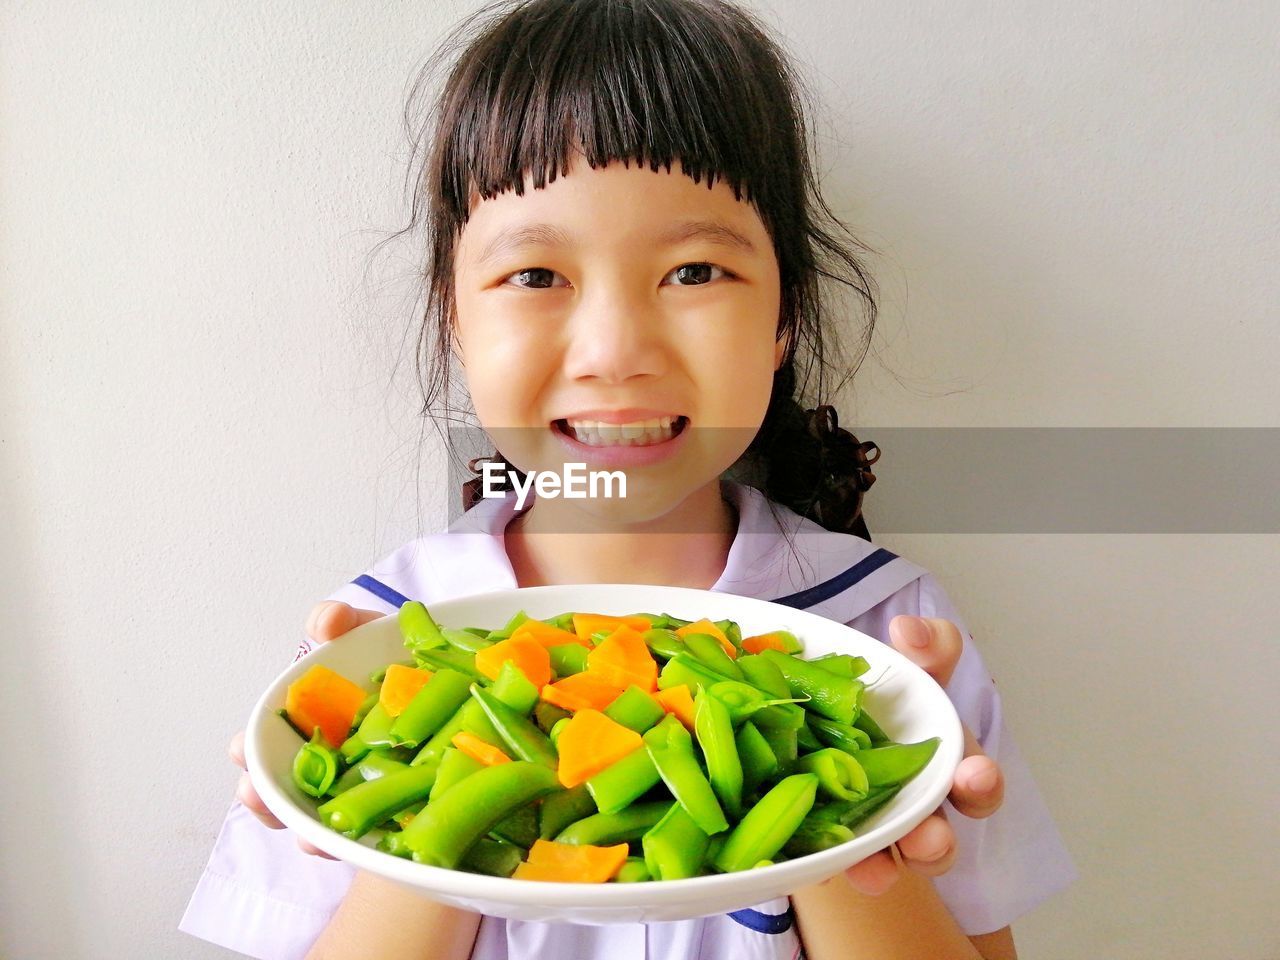 Portrait of smiling girl holding food